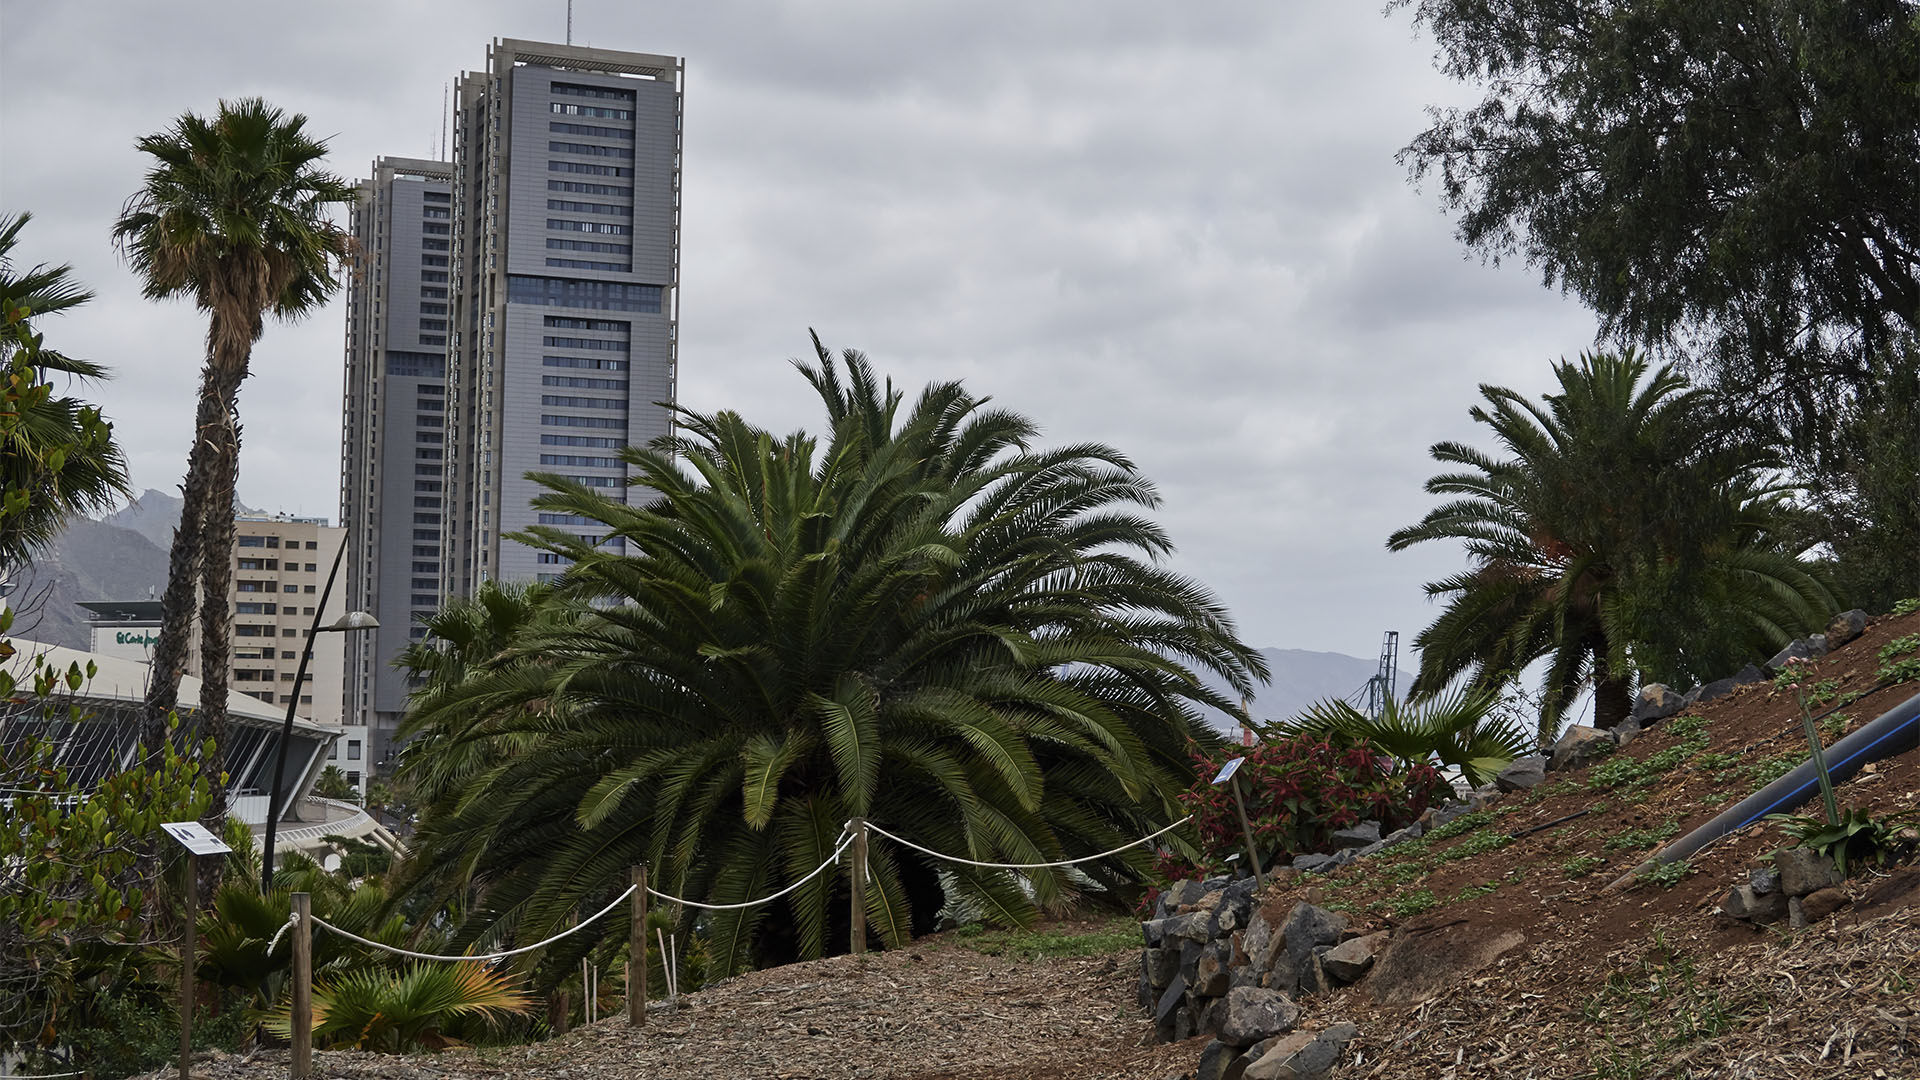 Palmetum Santa Cruz de Tenerife.